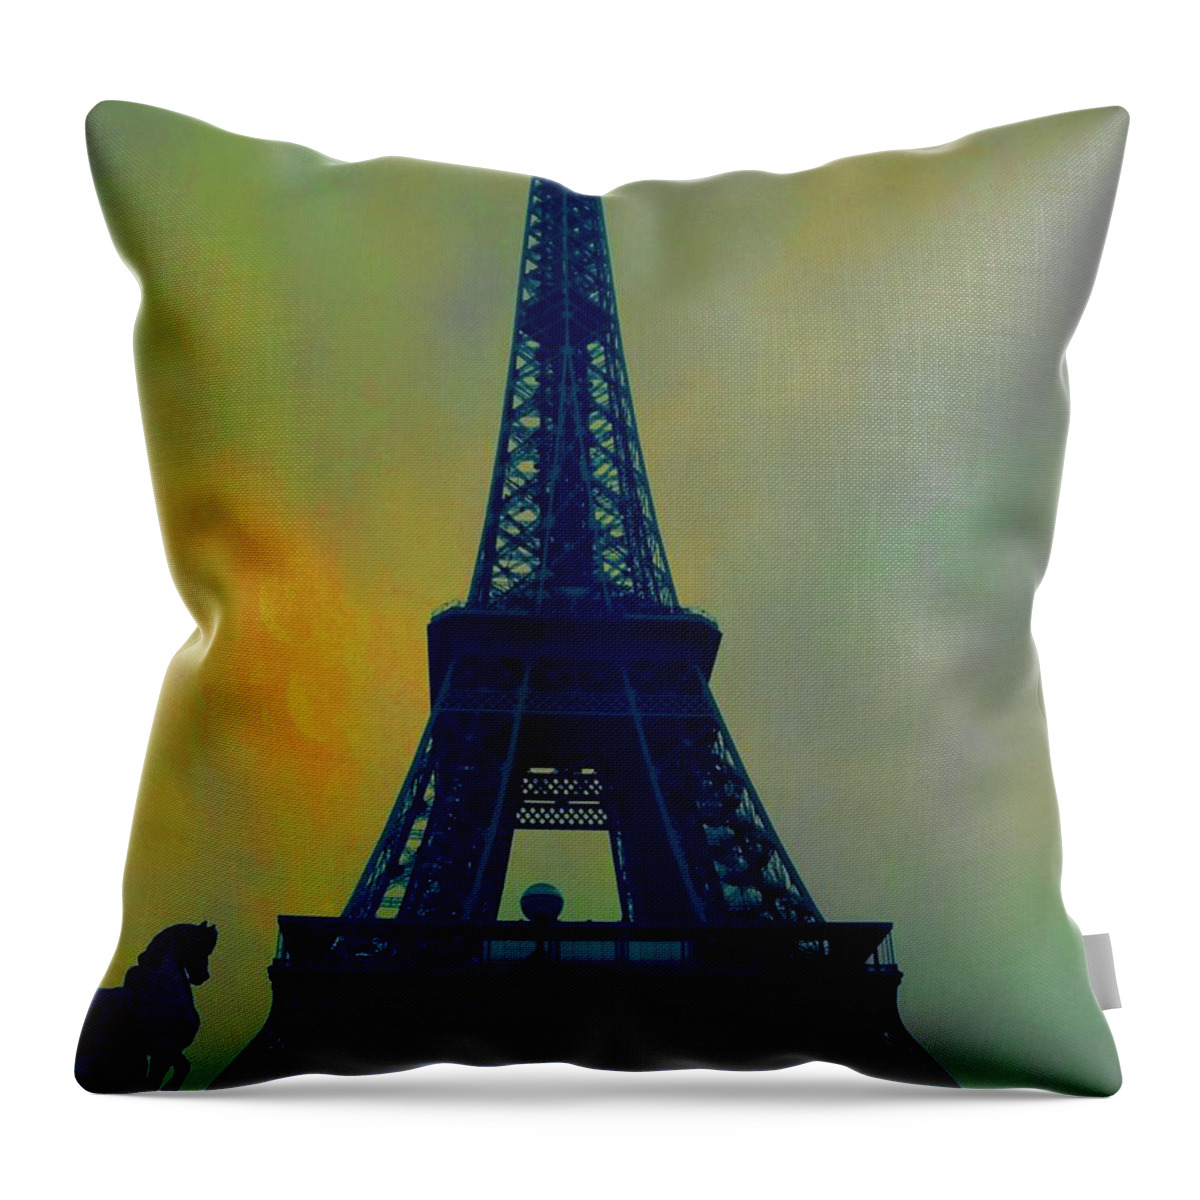 Eiffel Tower Throw Pillow featuring the digital art Evening Eiffel Tower by Marina McLain